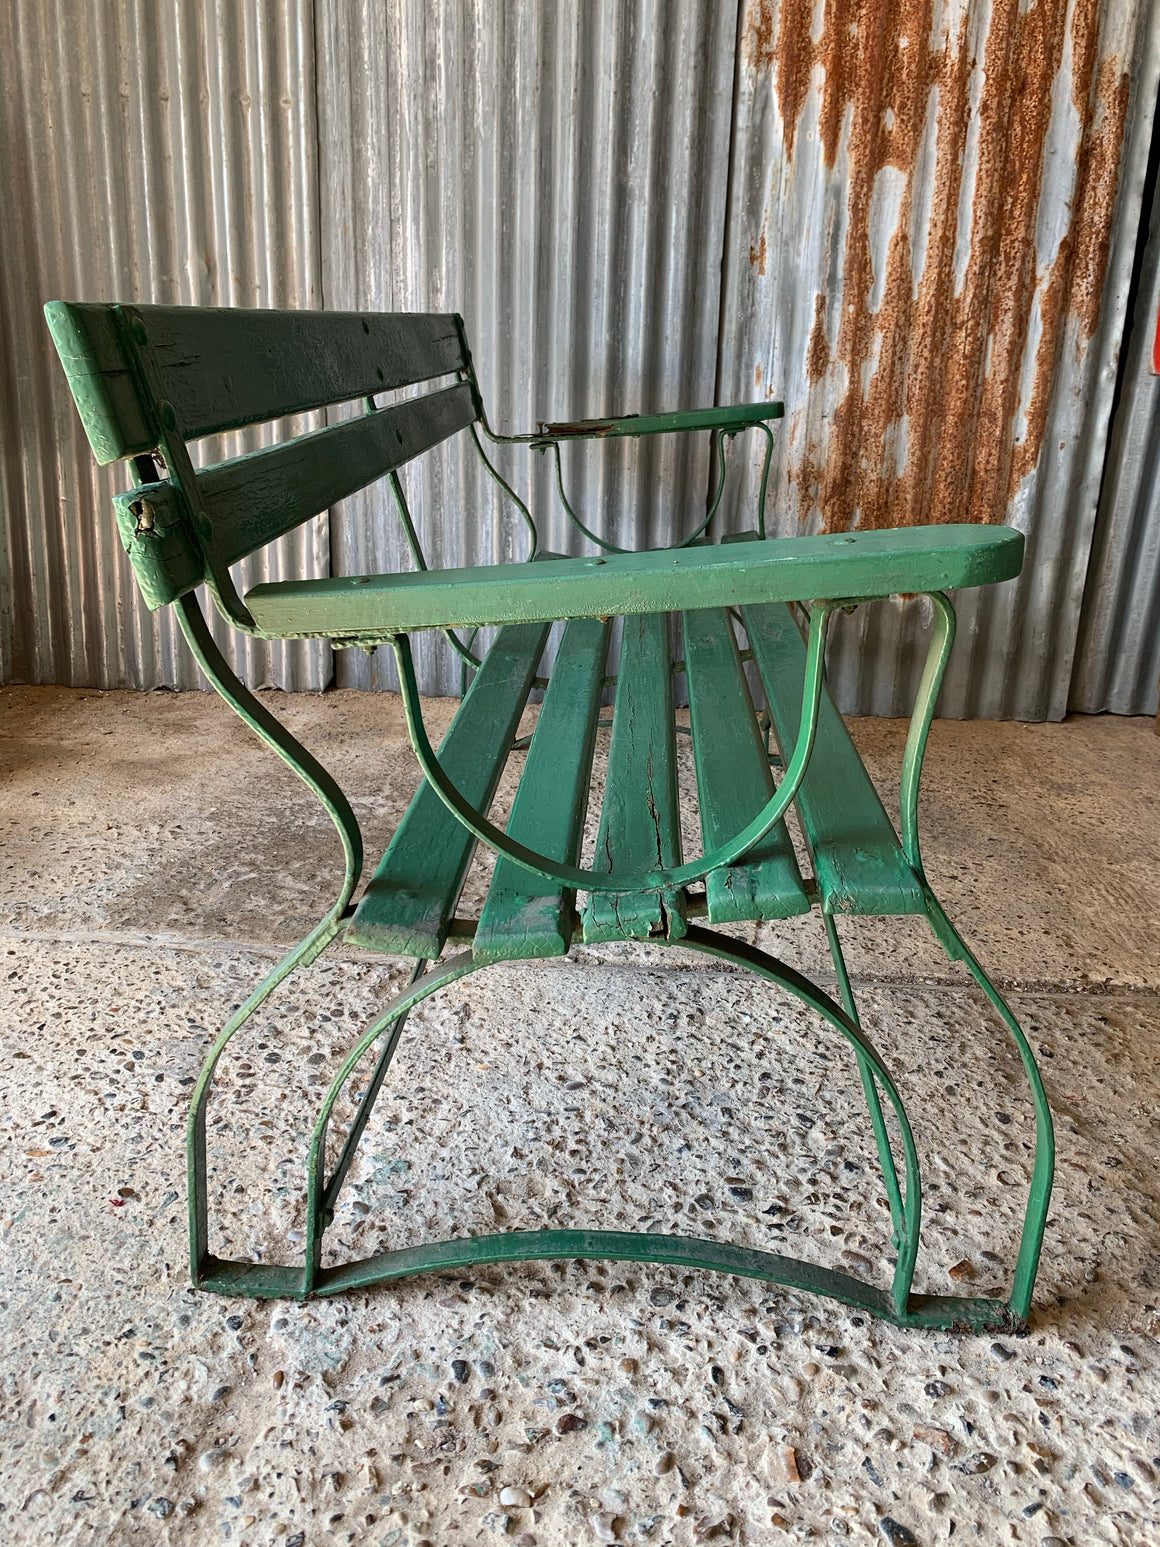 A green cast iron and wooden garden bench